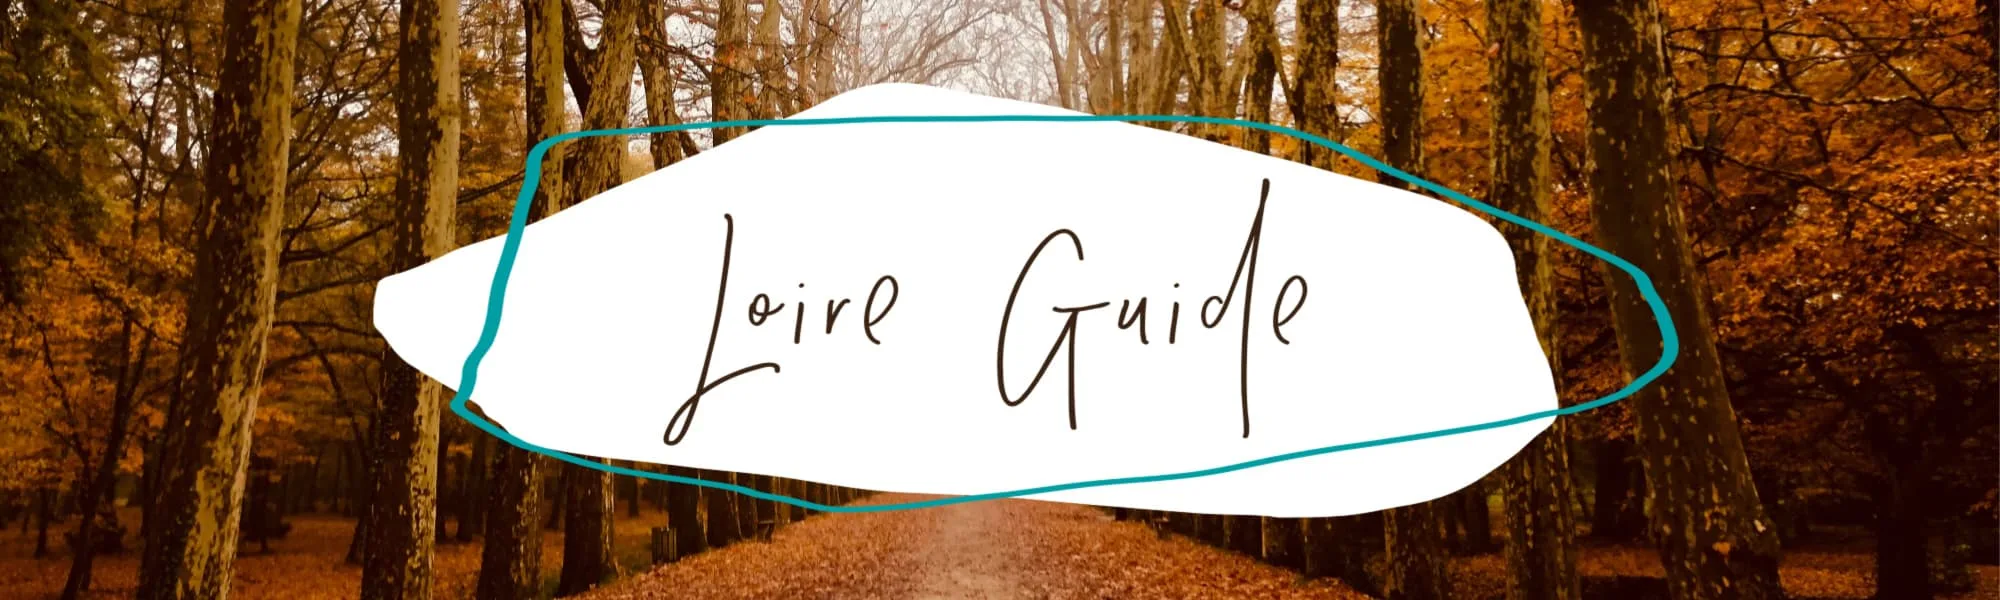 Loire travel guide